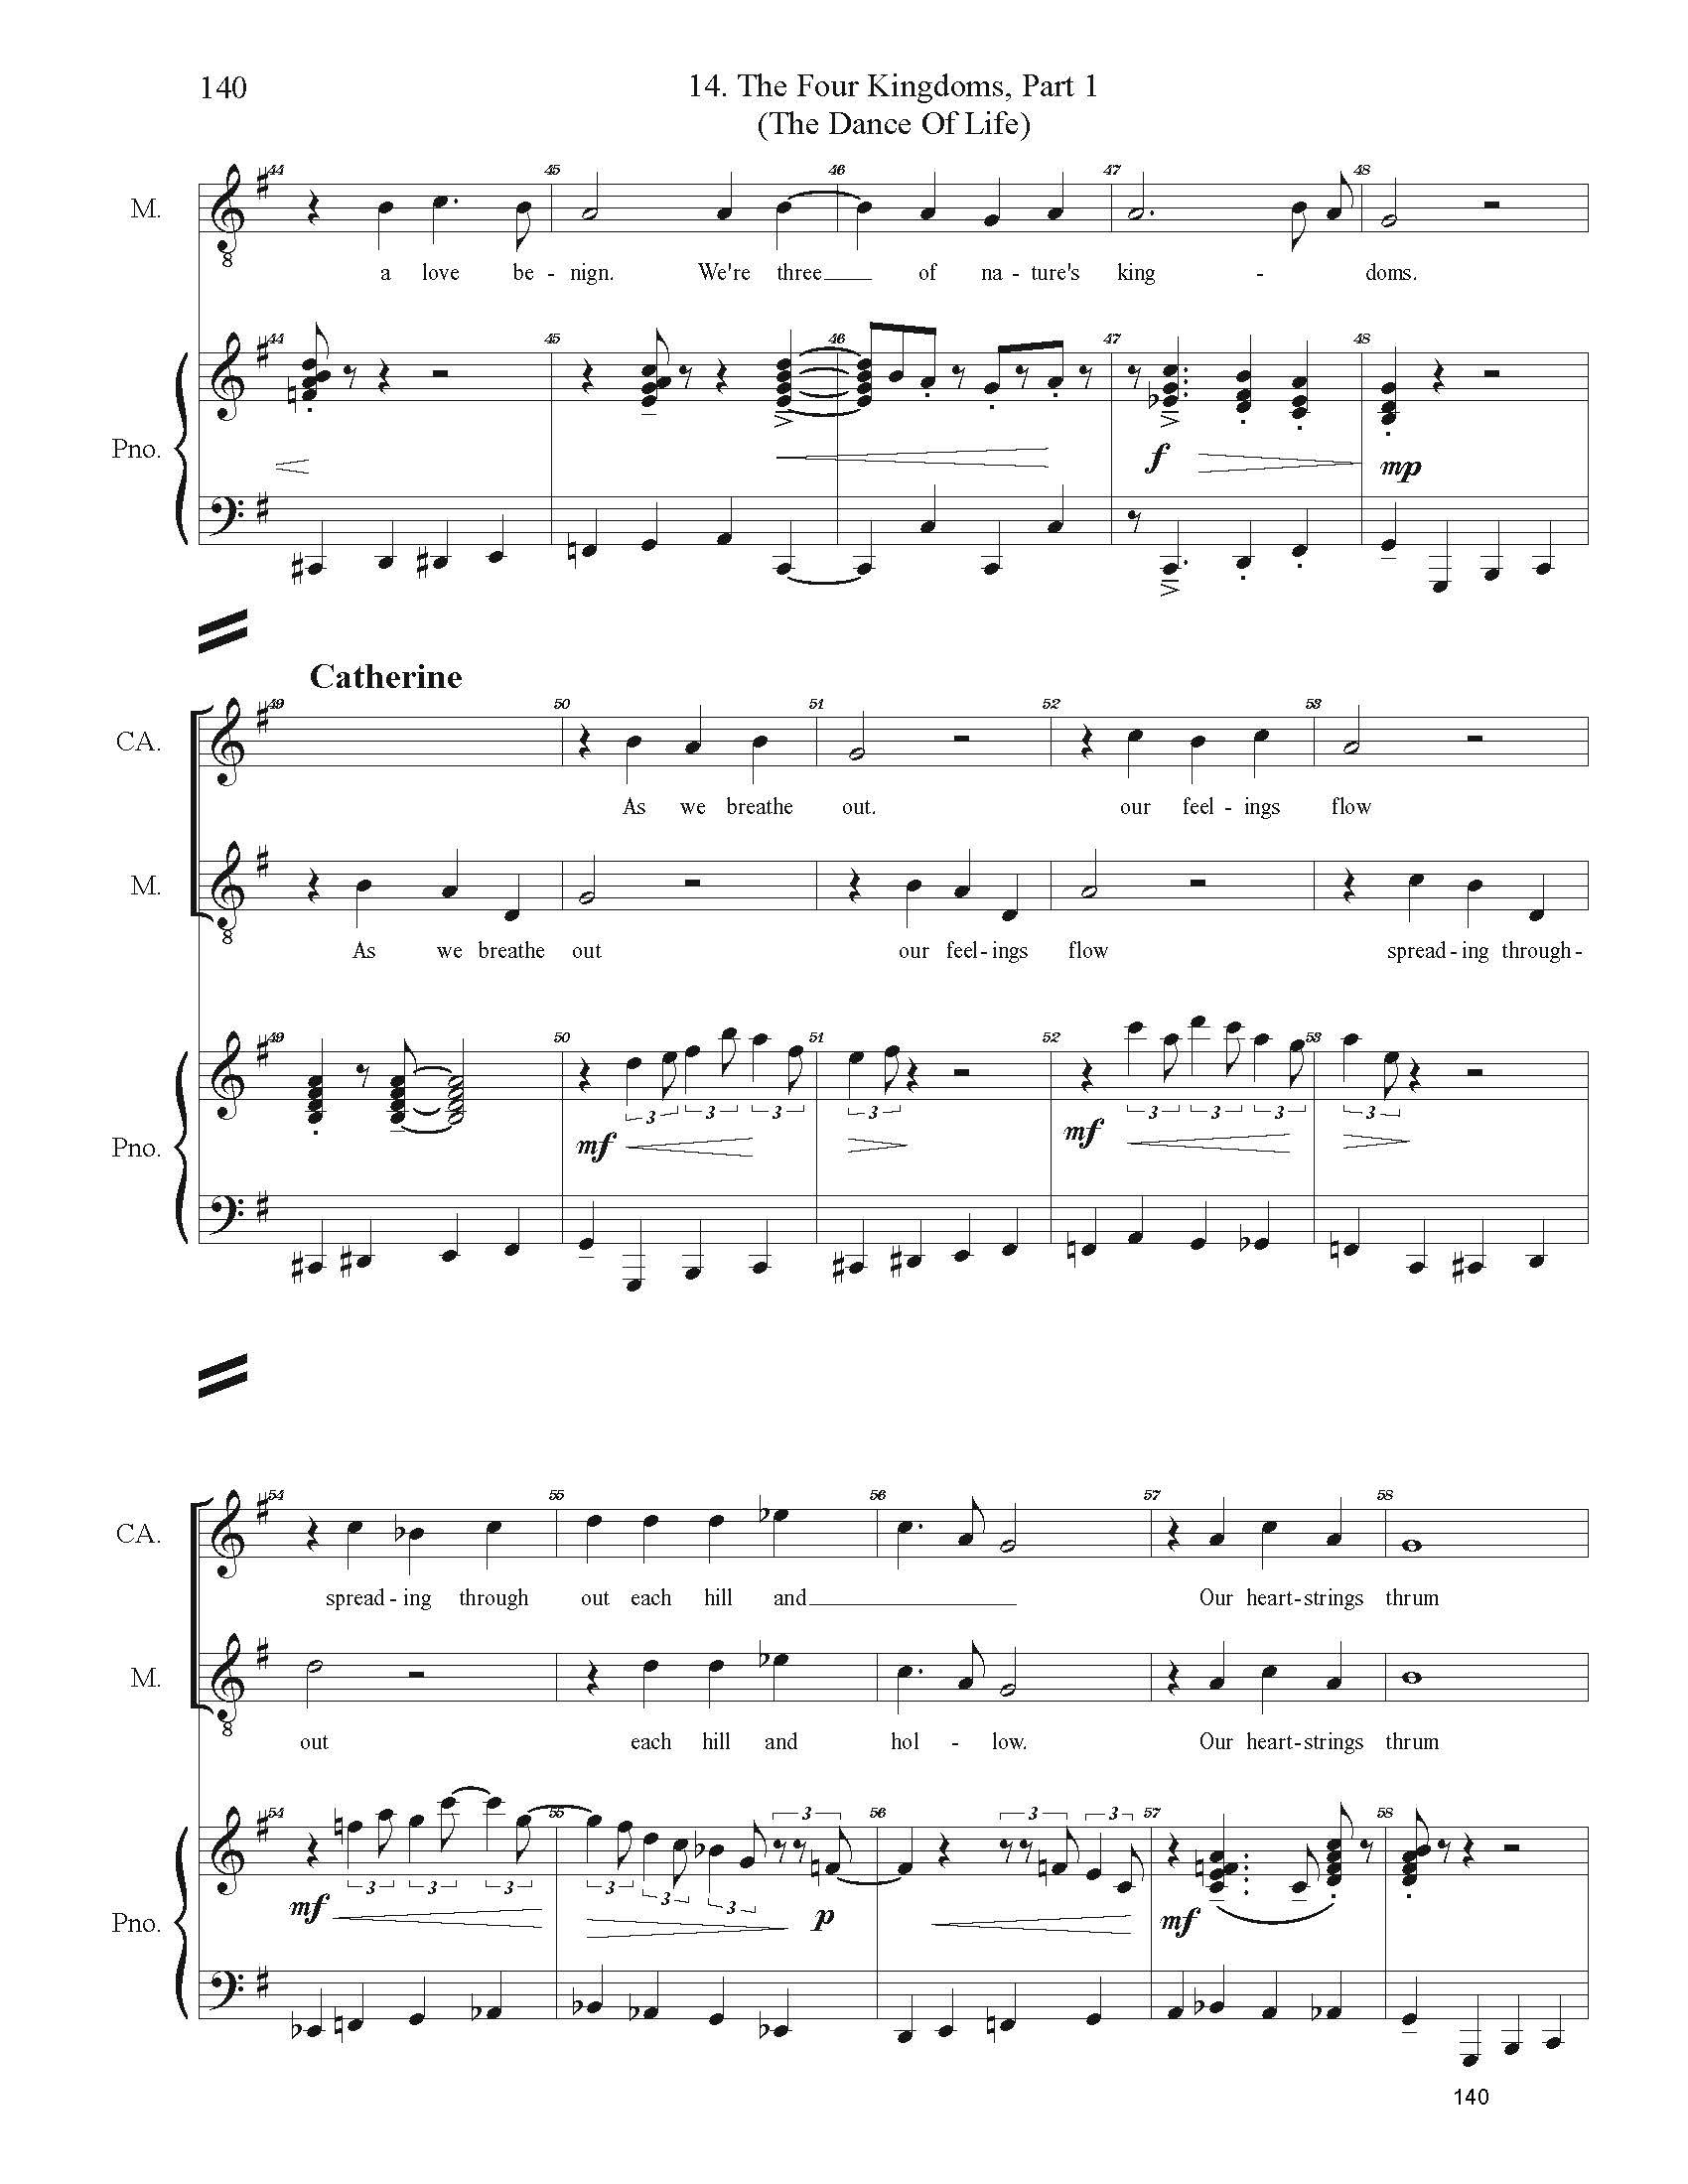 FULL PIANO VOCAL SCORE DRAFT 1 - Score_Page_140.jpg